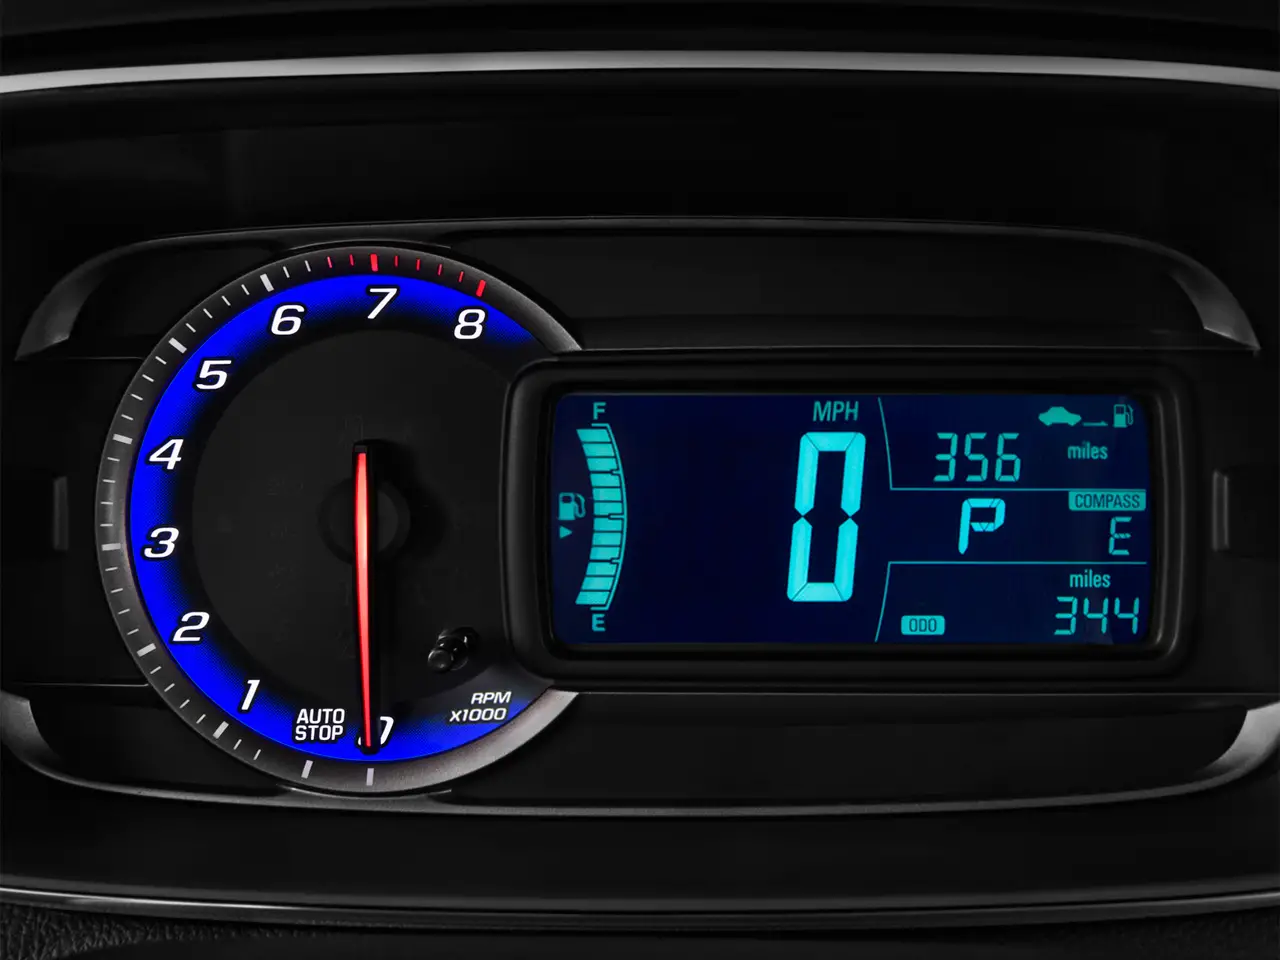 Chevrolet Trax LT 2016 speedometer view